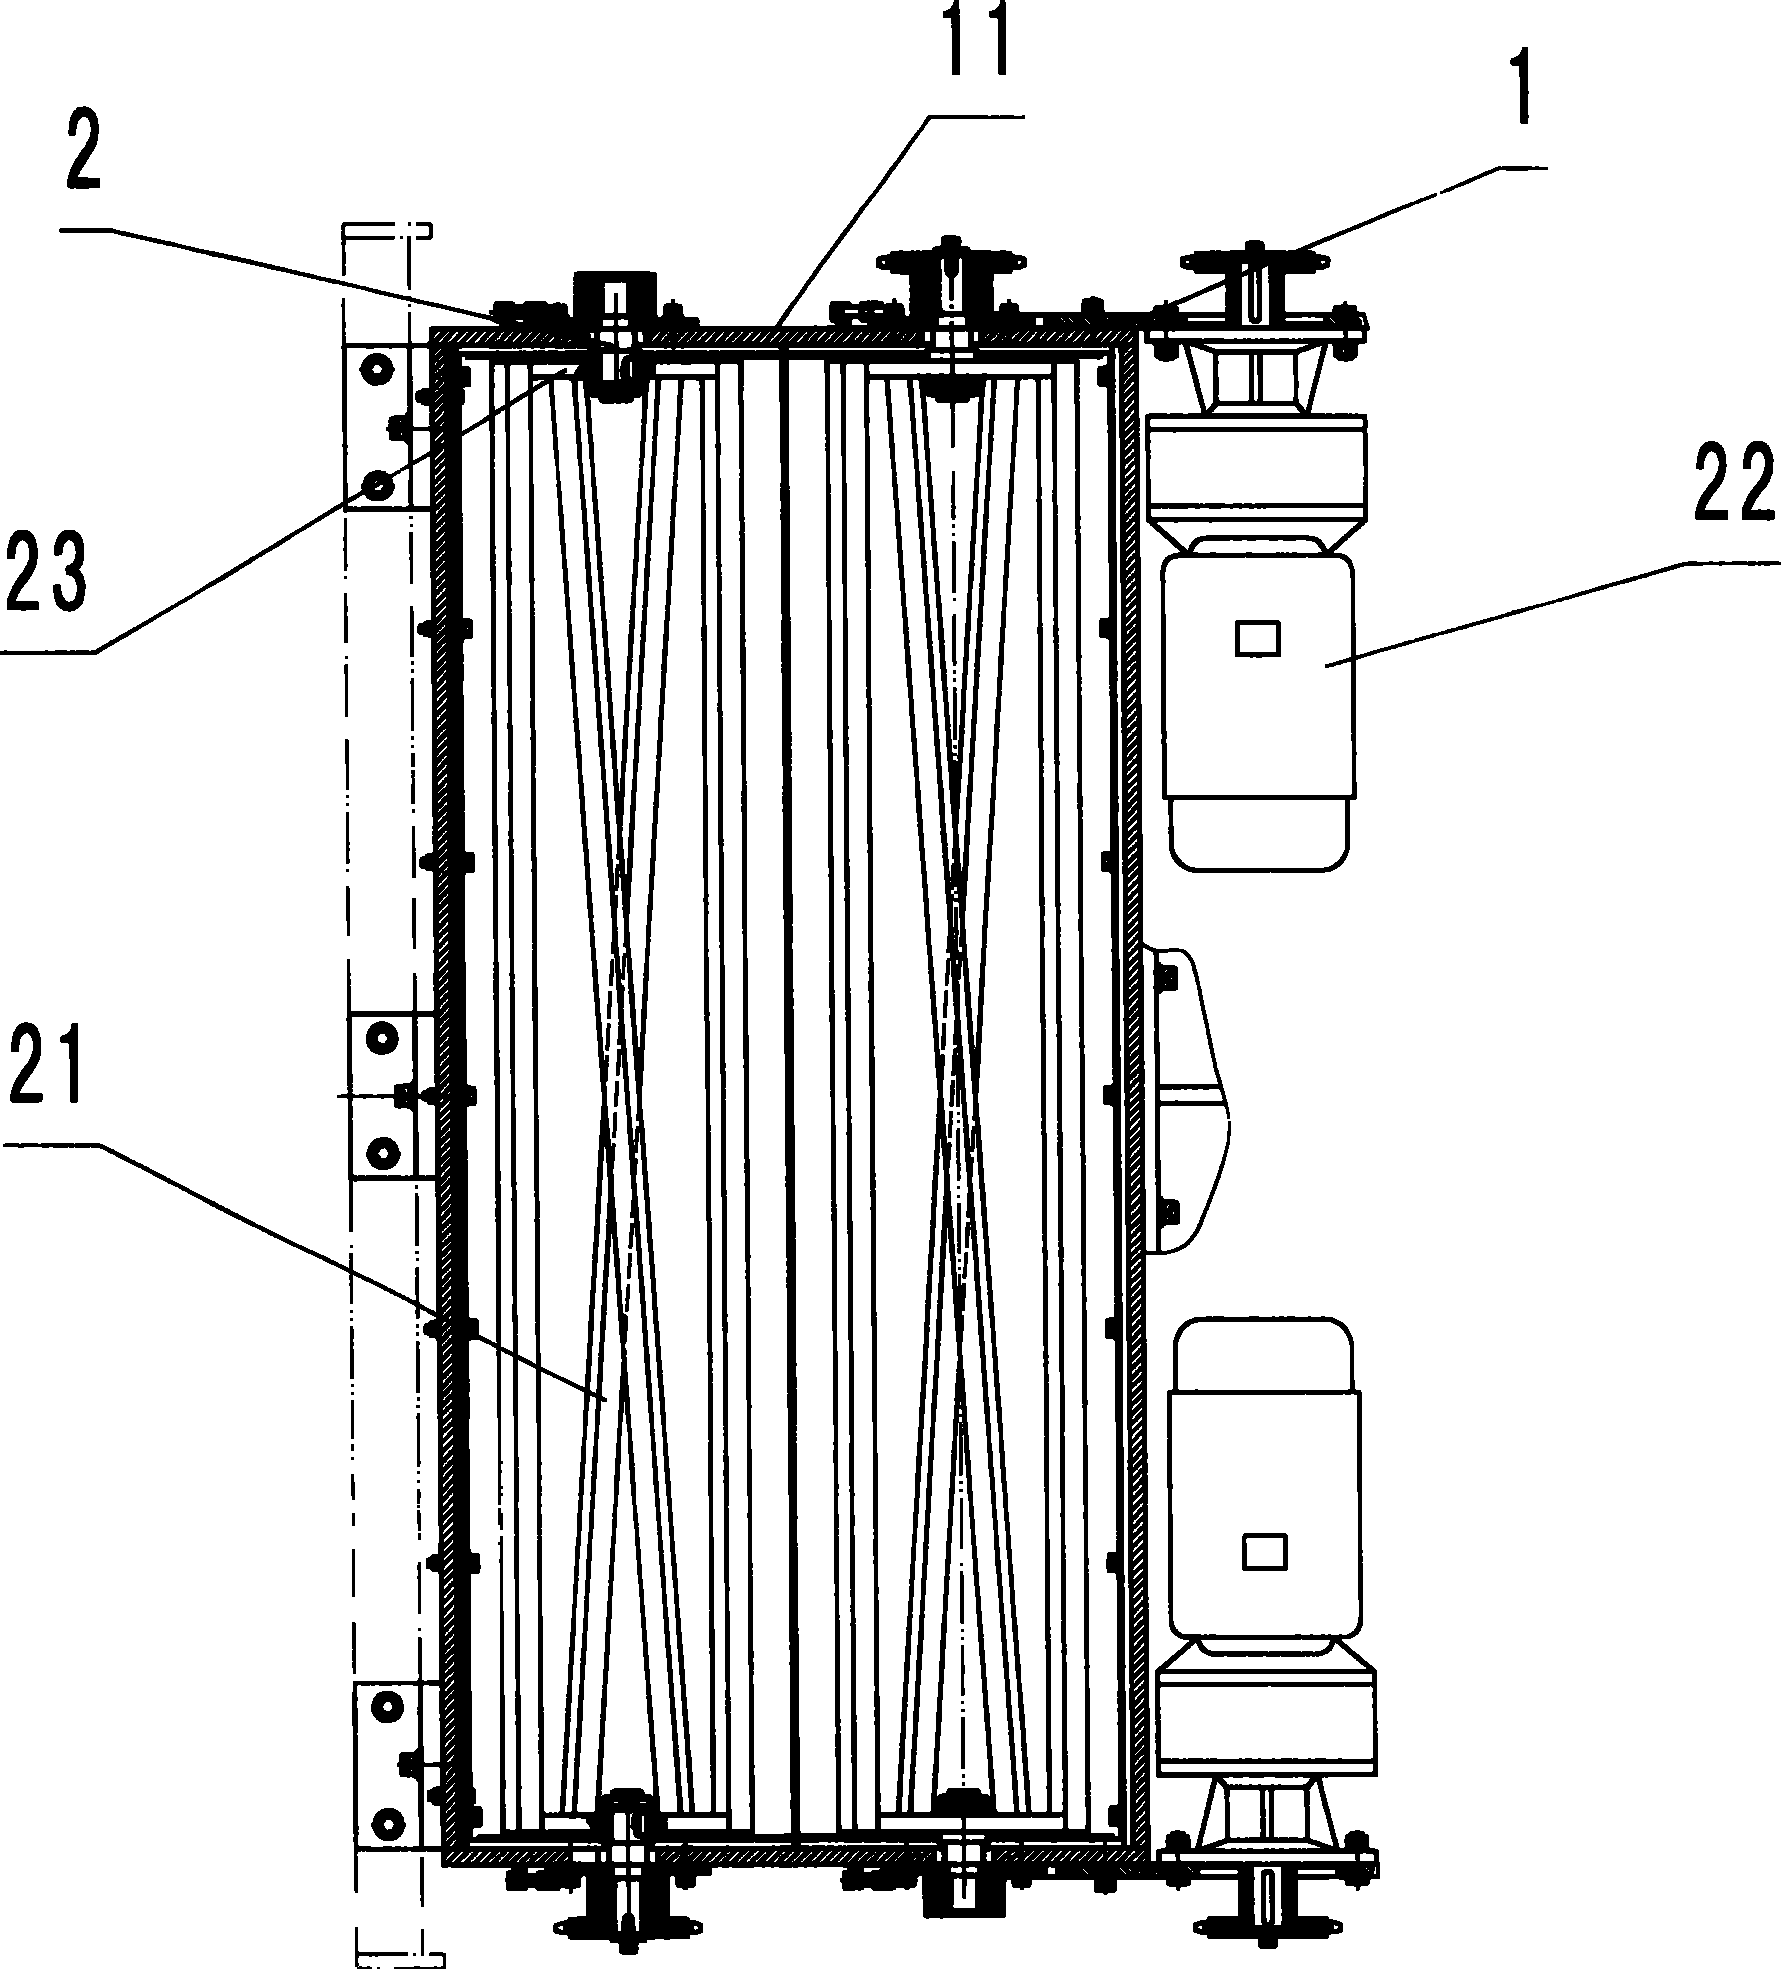 Brick-making machine cloth mechanism with material stirring mechanism